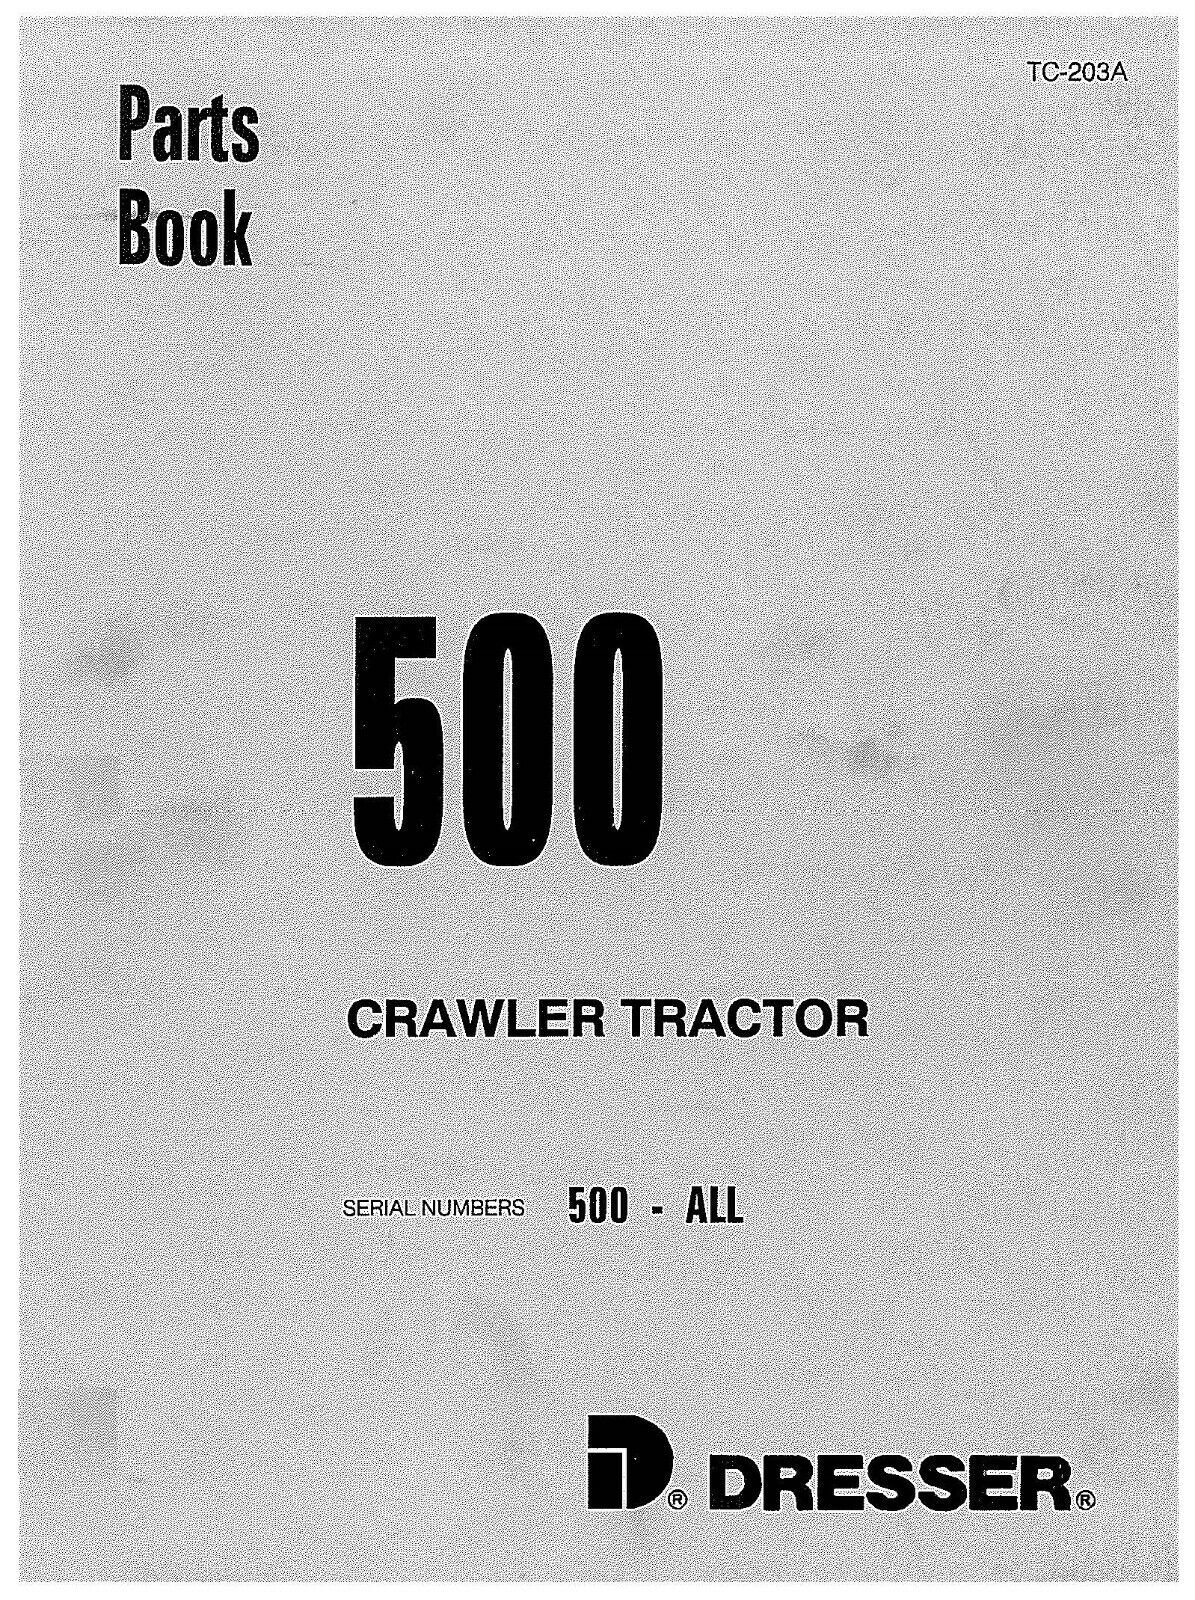 SERVICE PARTS MANUAL FITS 1967 IH INTERNATION 500-ALL CRAWLER